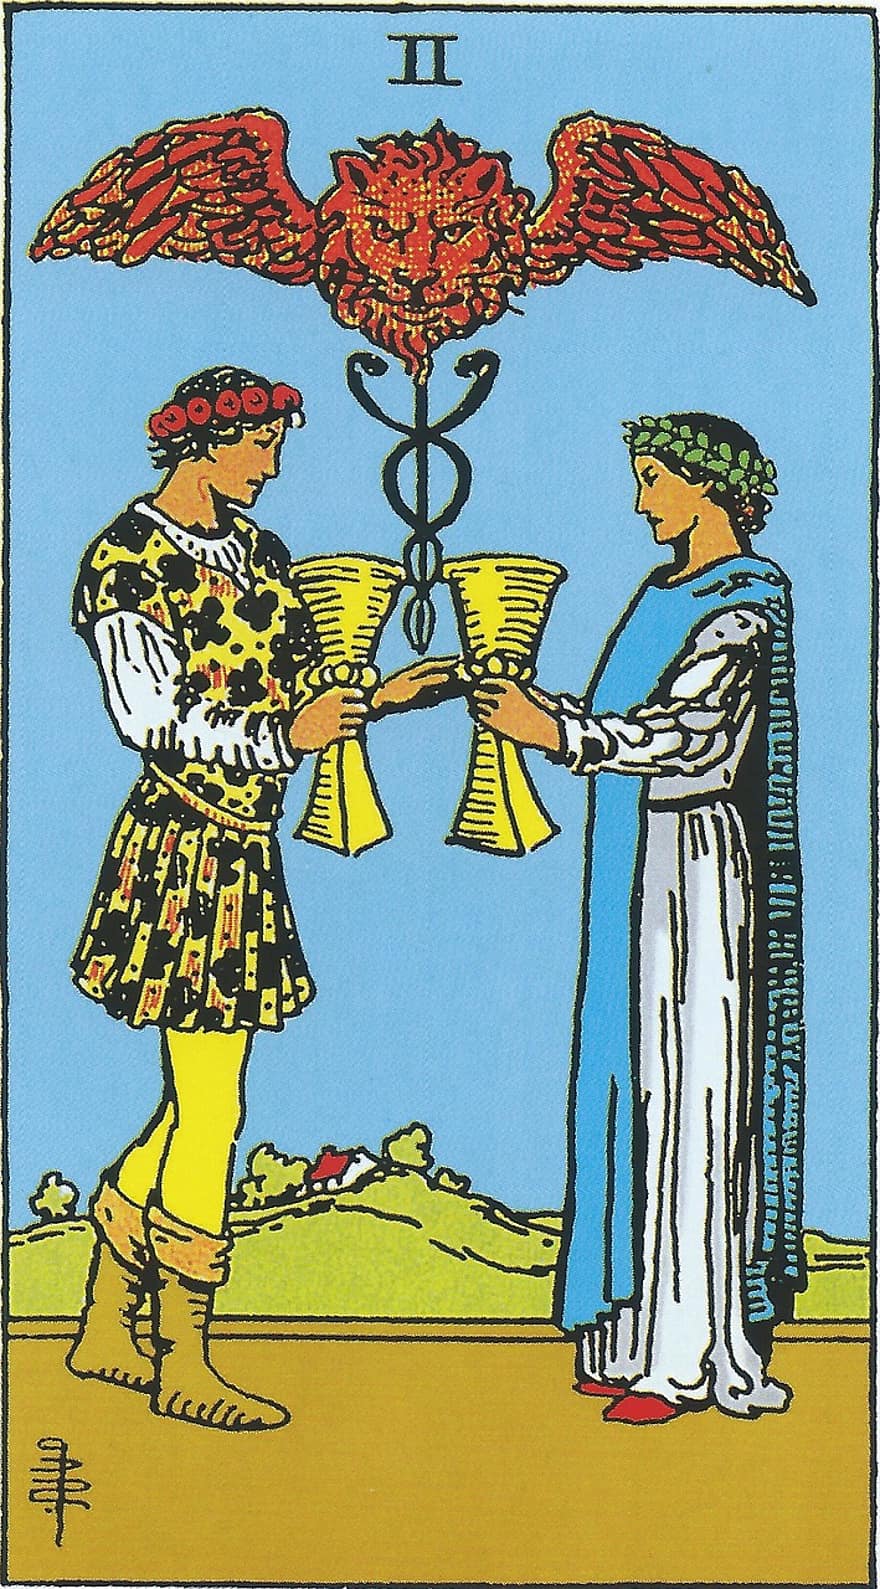 Two Of Cups, Tarot, Card, Minor Arcana, Rider-waite, Cups, Tarot Card, Divination, Spirituality